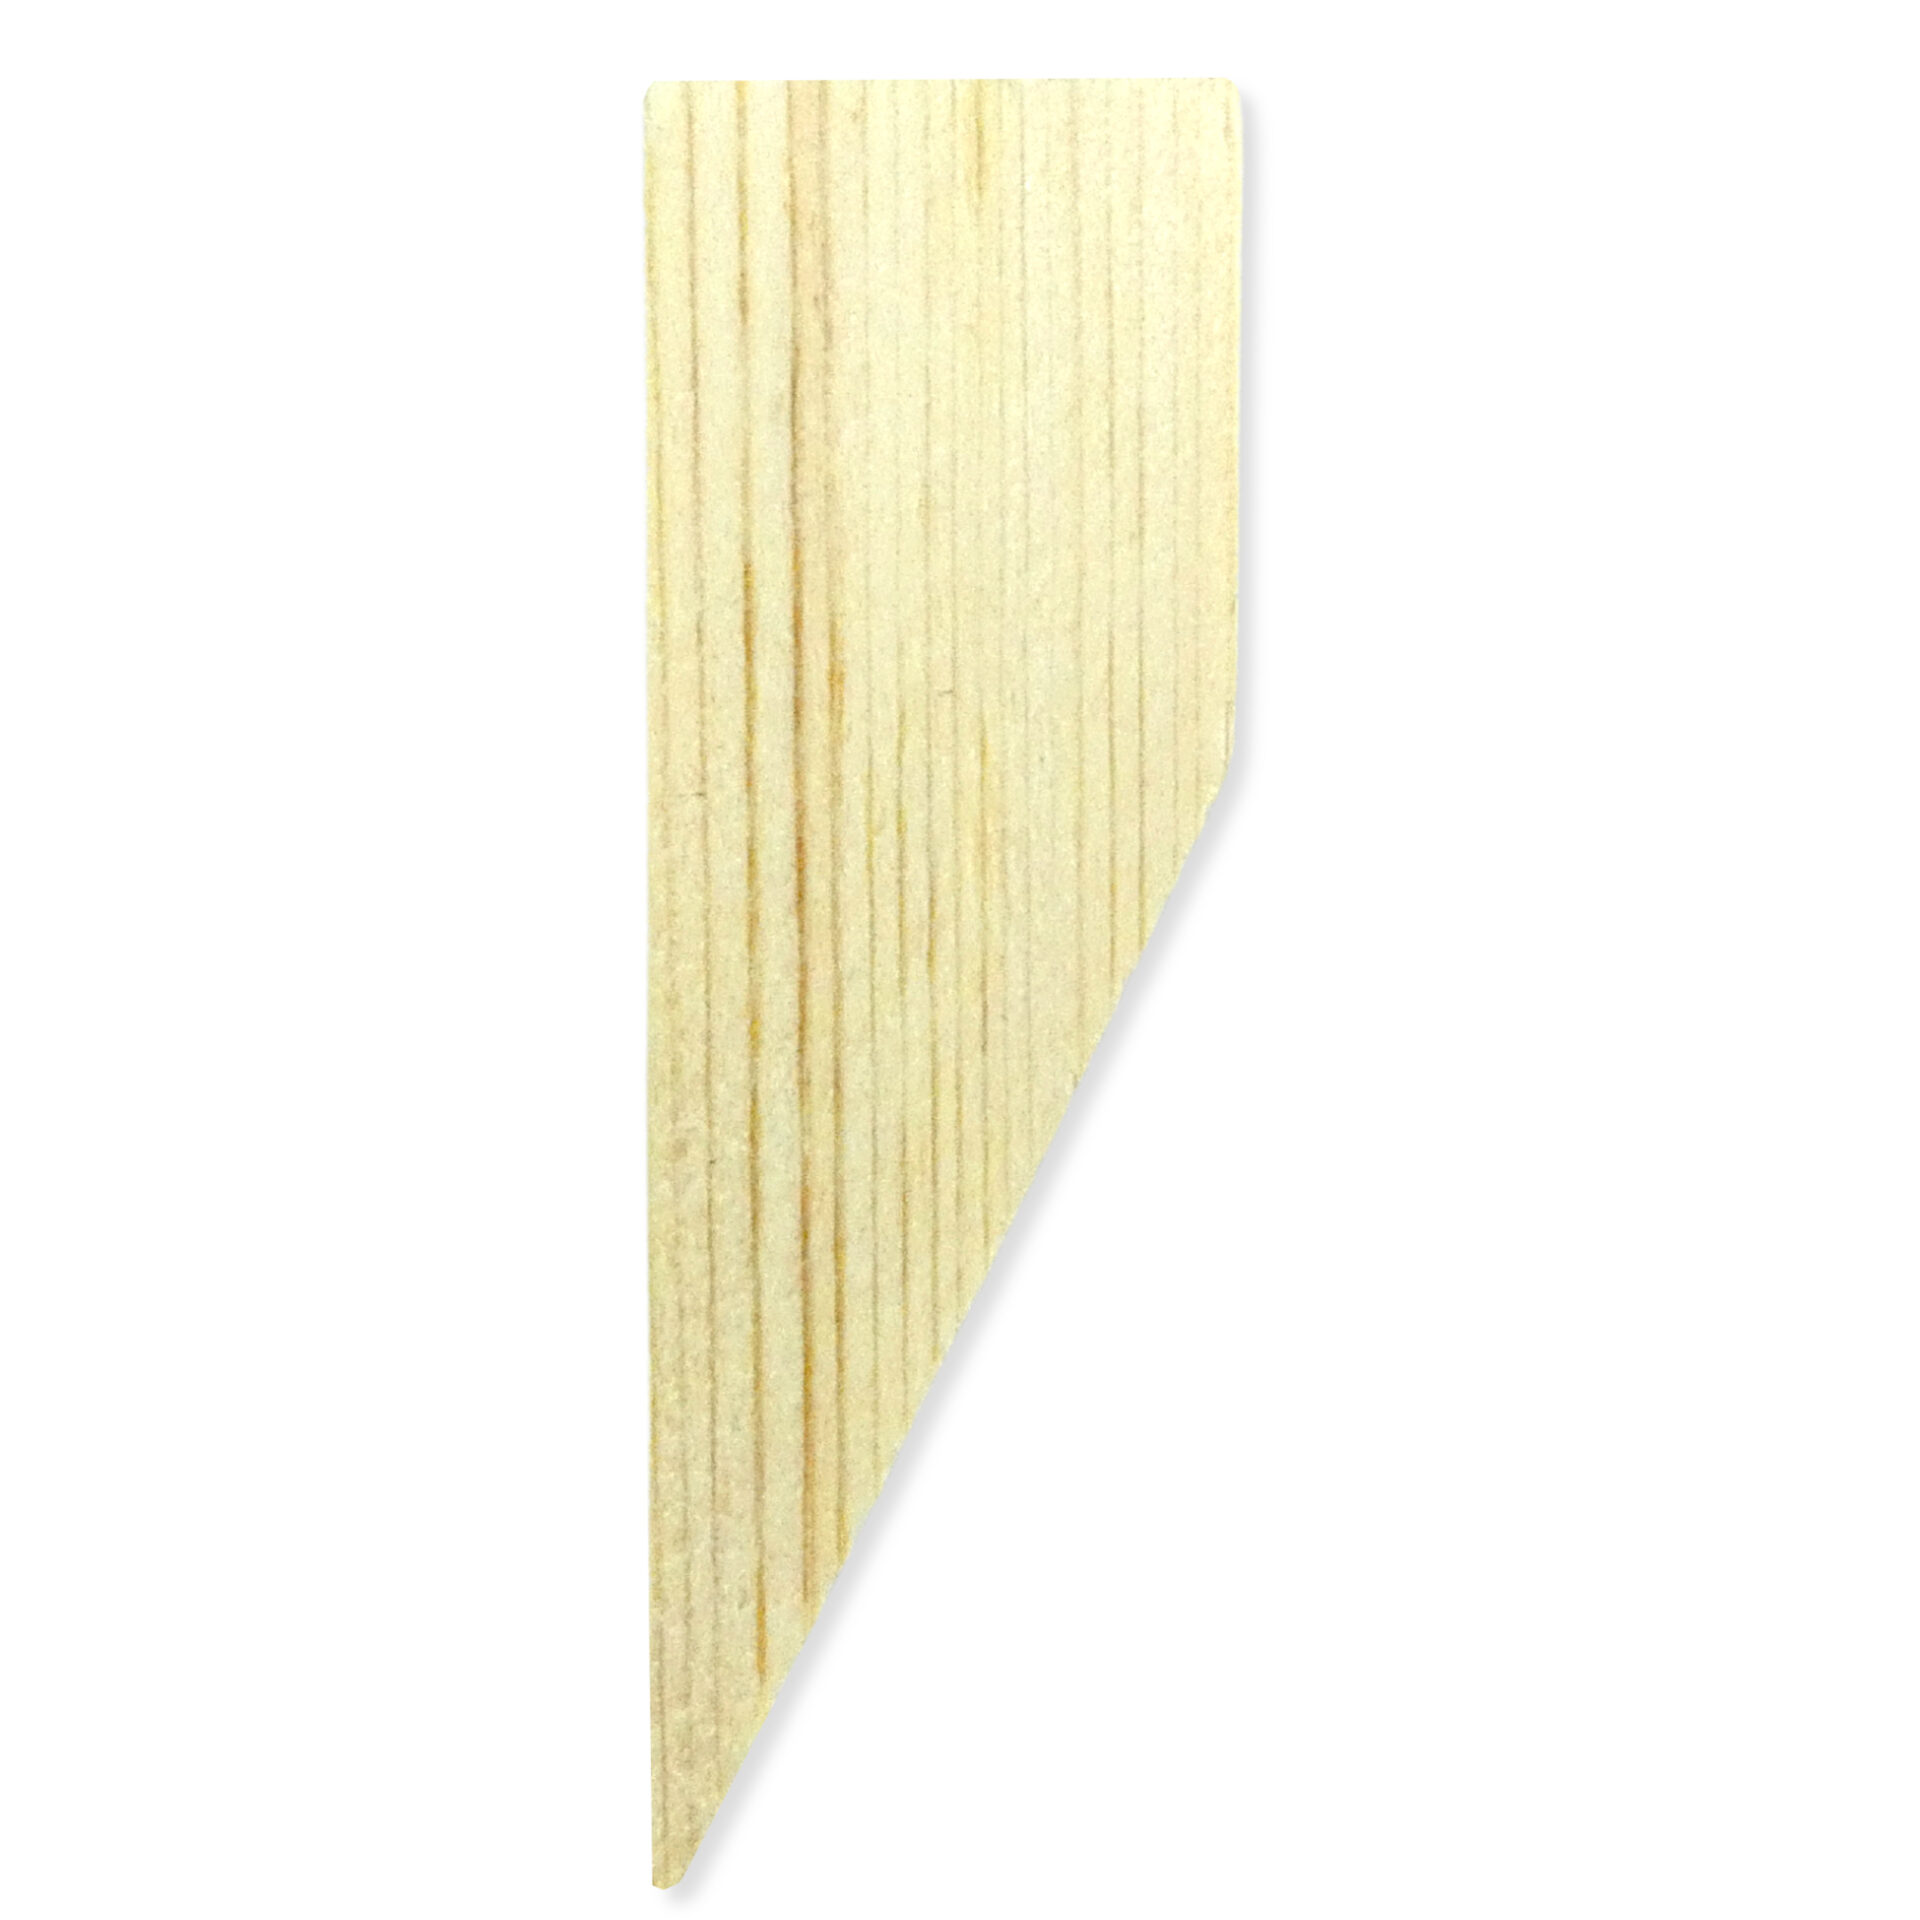 Klin z drewna do krosien malarskich 17×37 mm 1